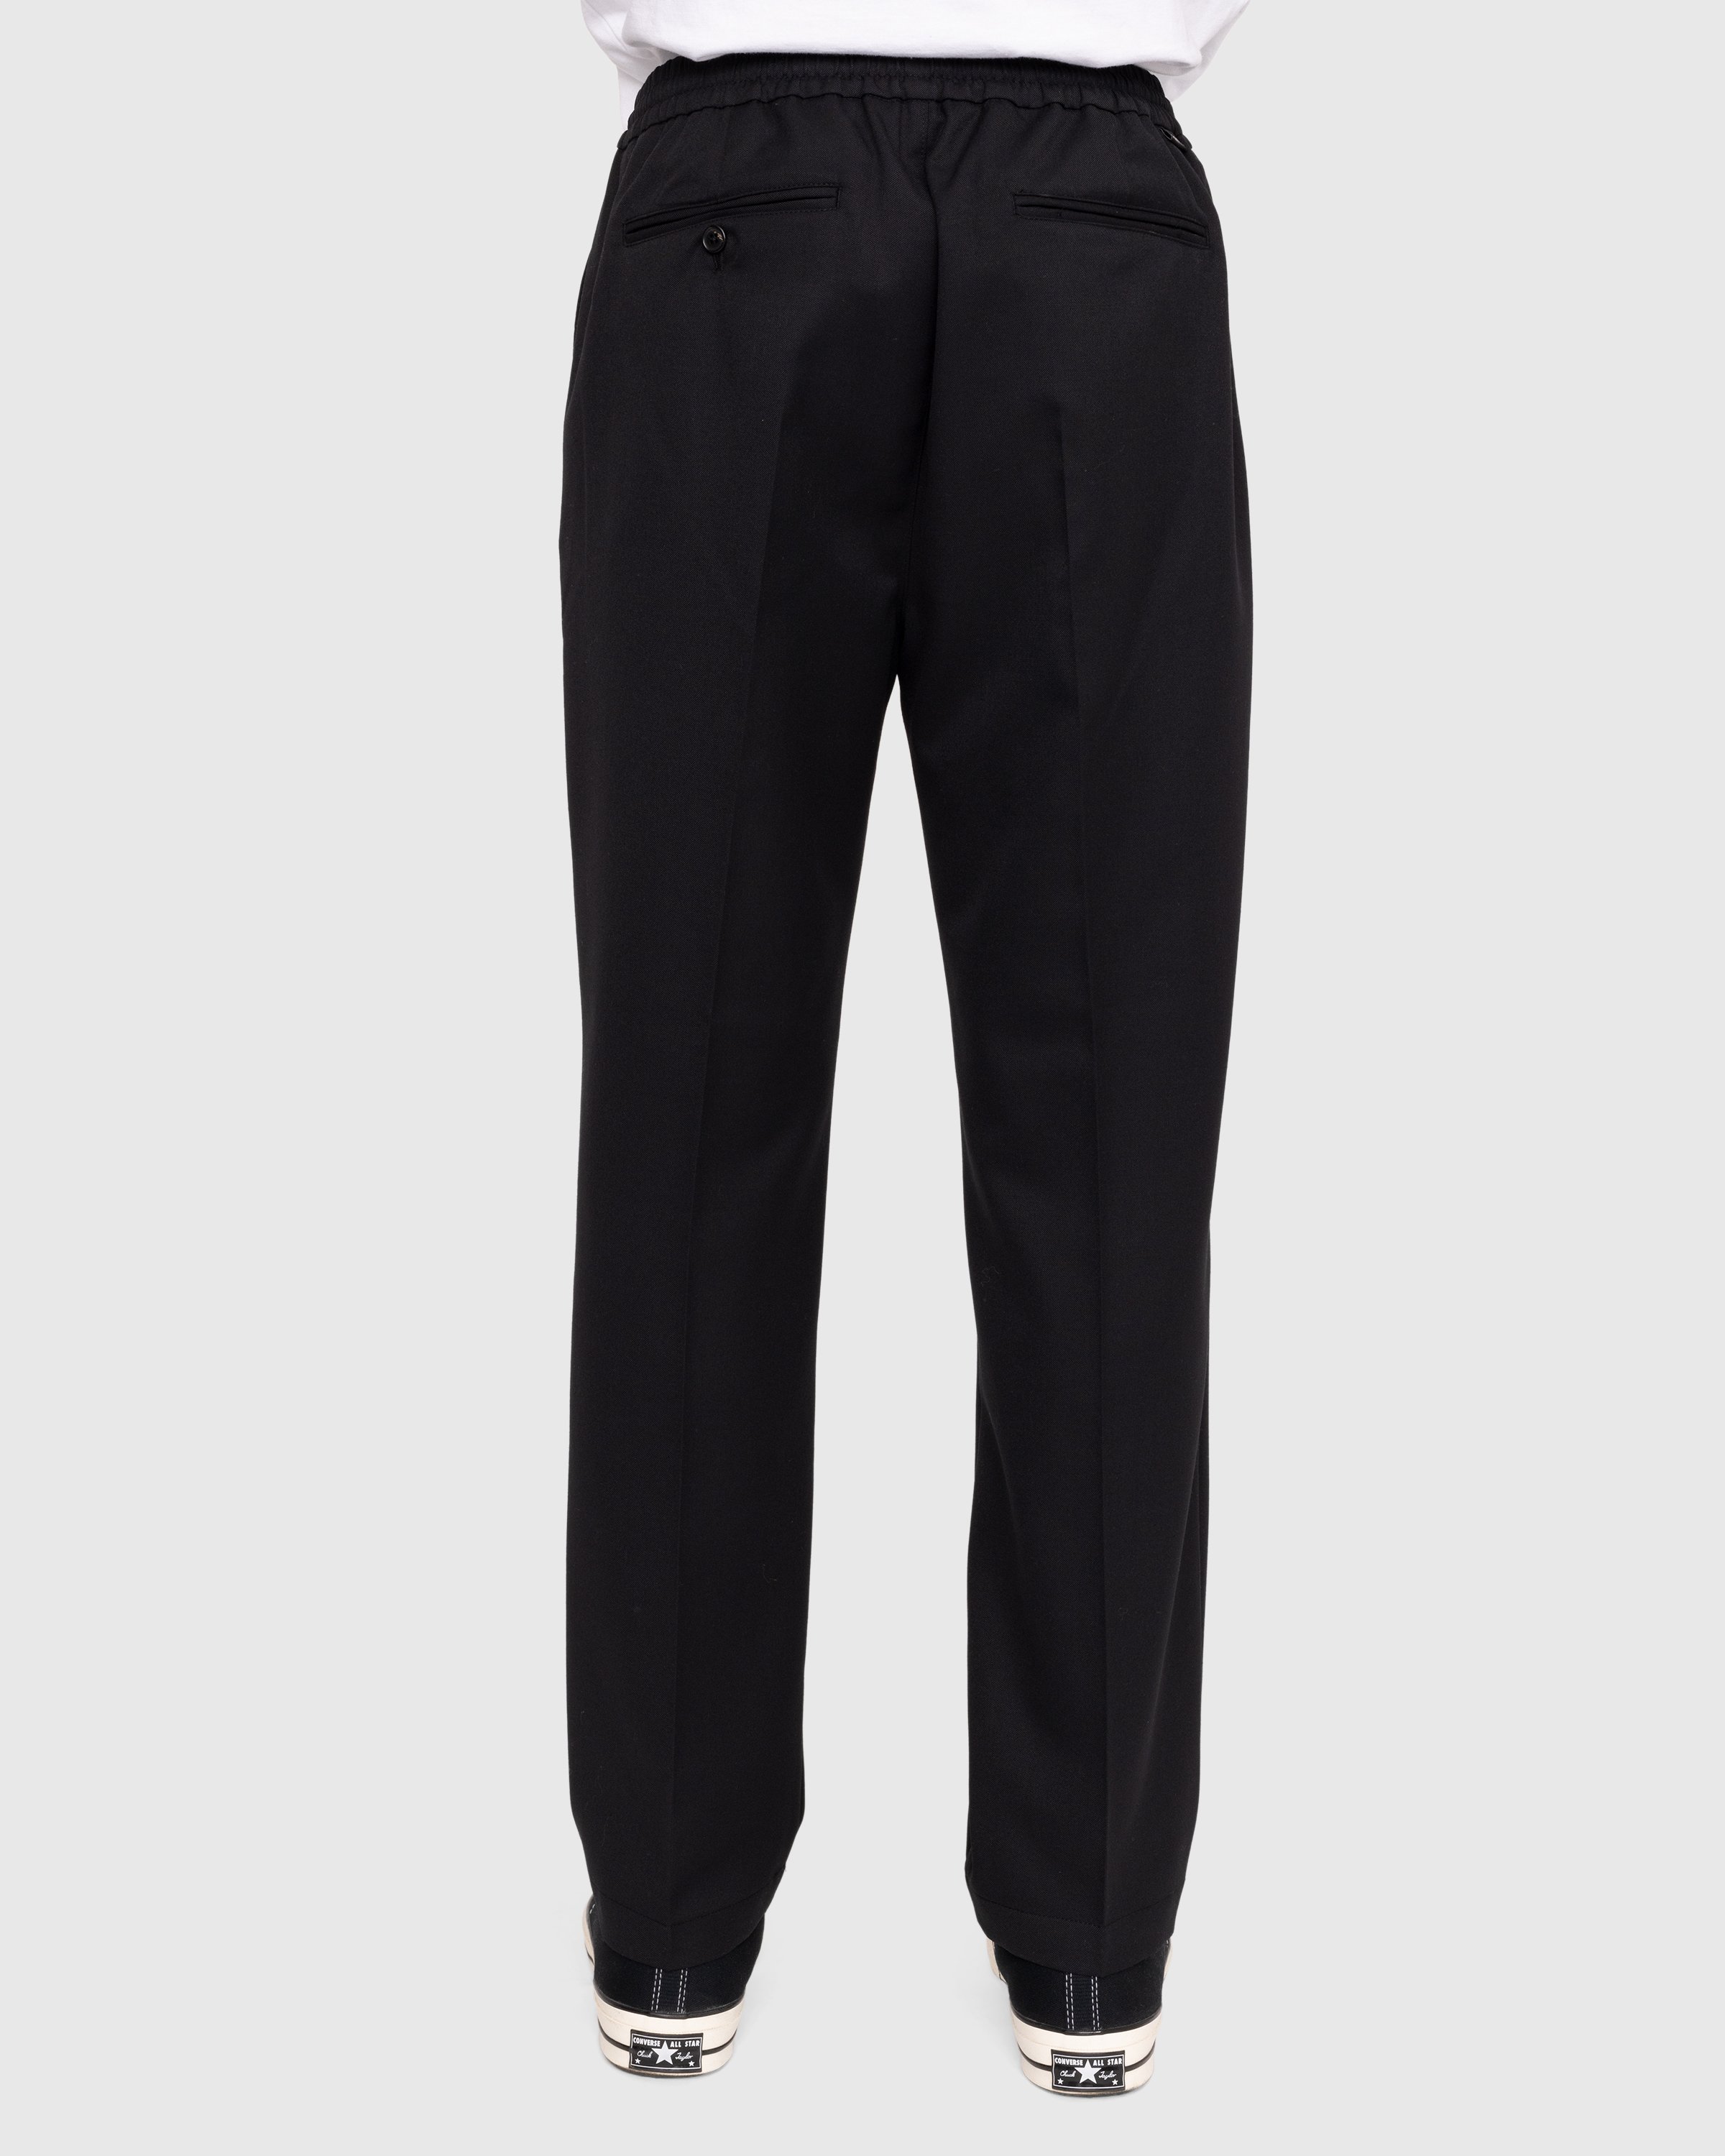 Highsnobiety - Wool Blend Elastic Pants Black - Clothing - Black - Image 4